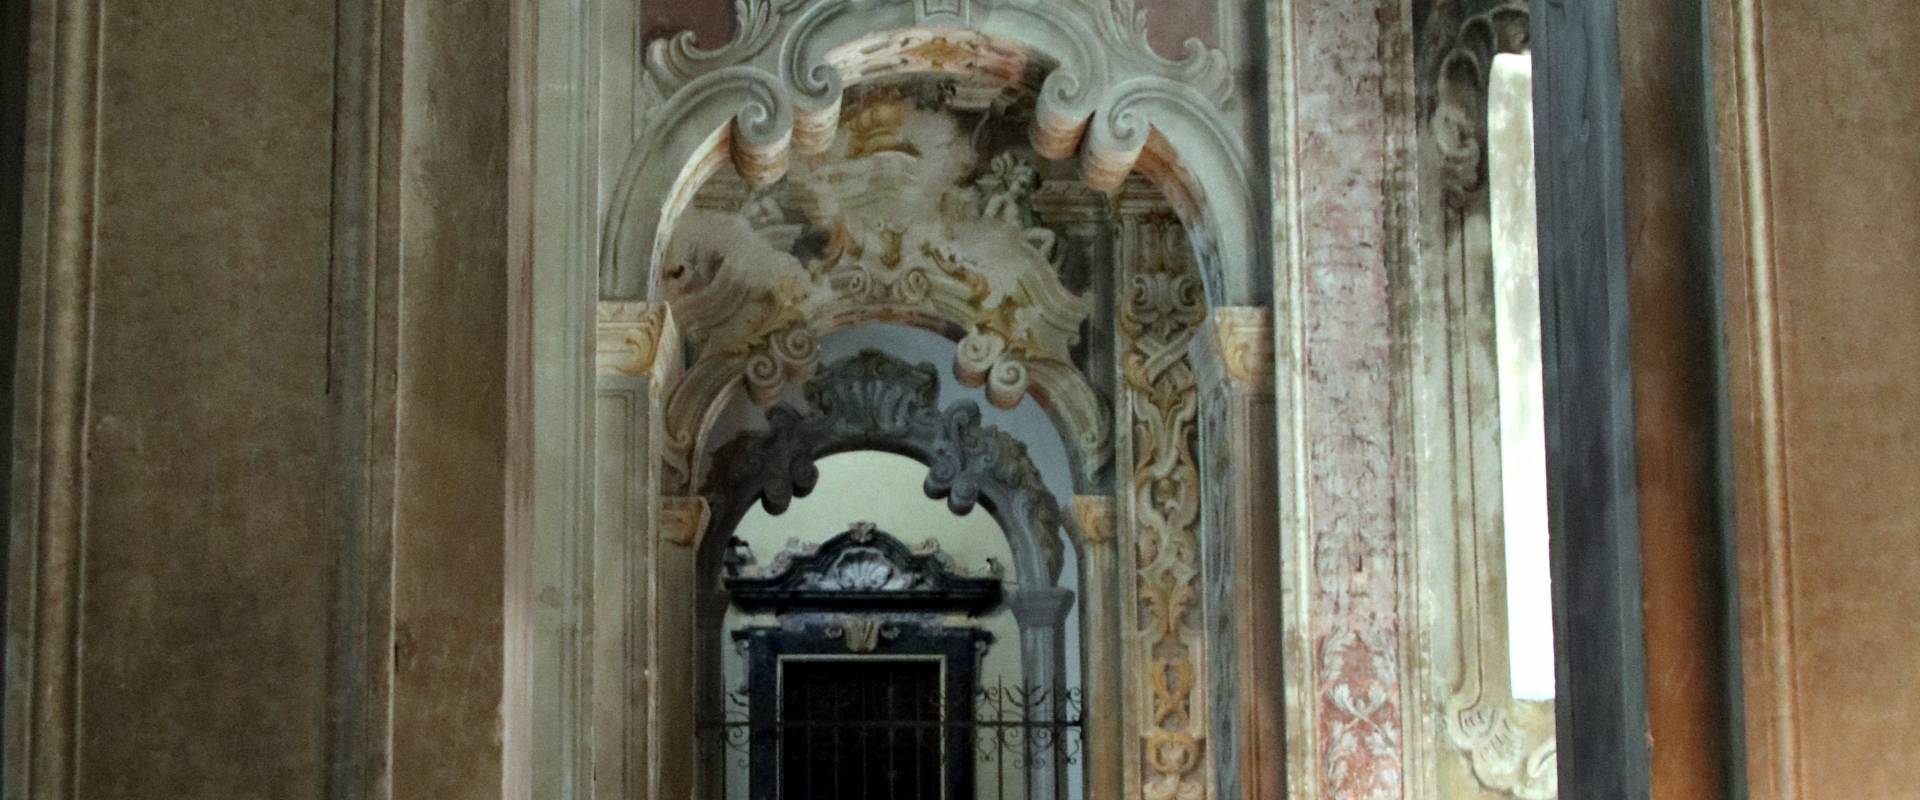 Chiesa di San Sisto (Piacenza), interno 12 photo by Mongolo1984